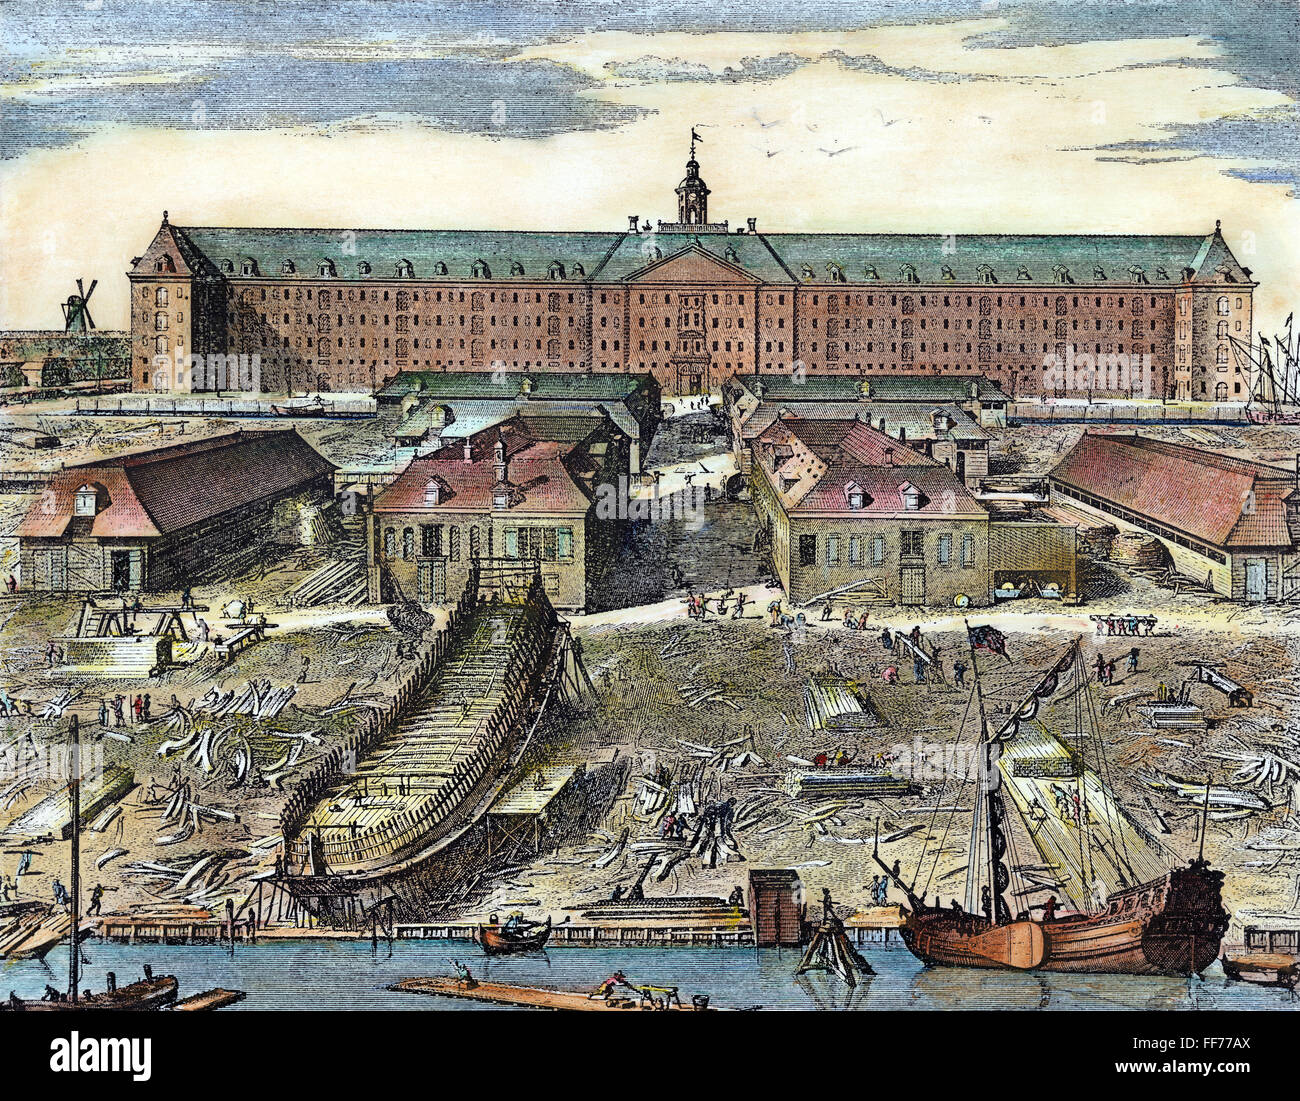 DUTCH East India Company. /NWharf e cantiere navale olandese della East India Company a Rotterdam. Incisione su rame, 1694, J. Mulder. Foto Stock